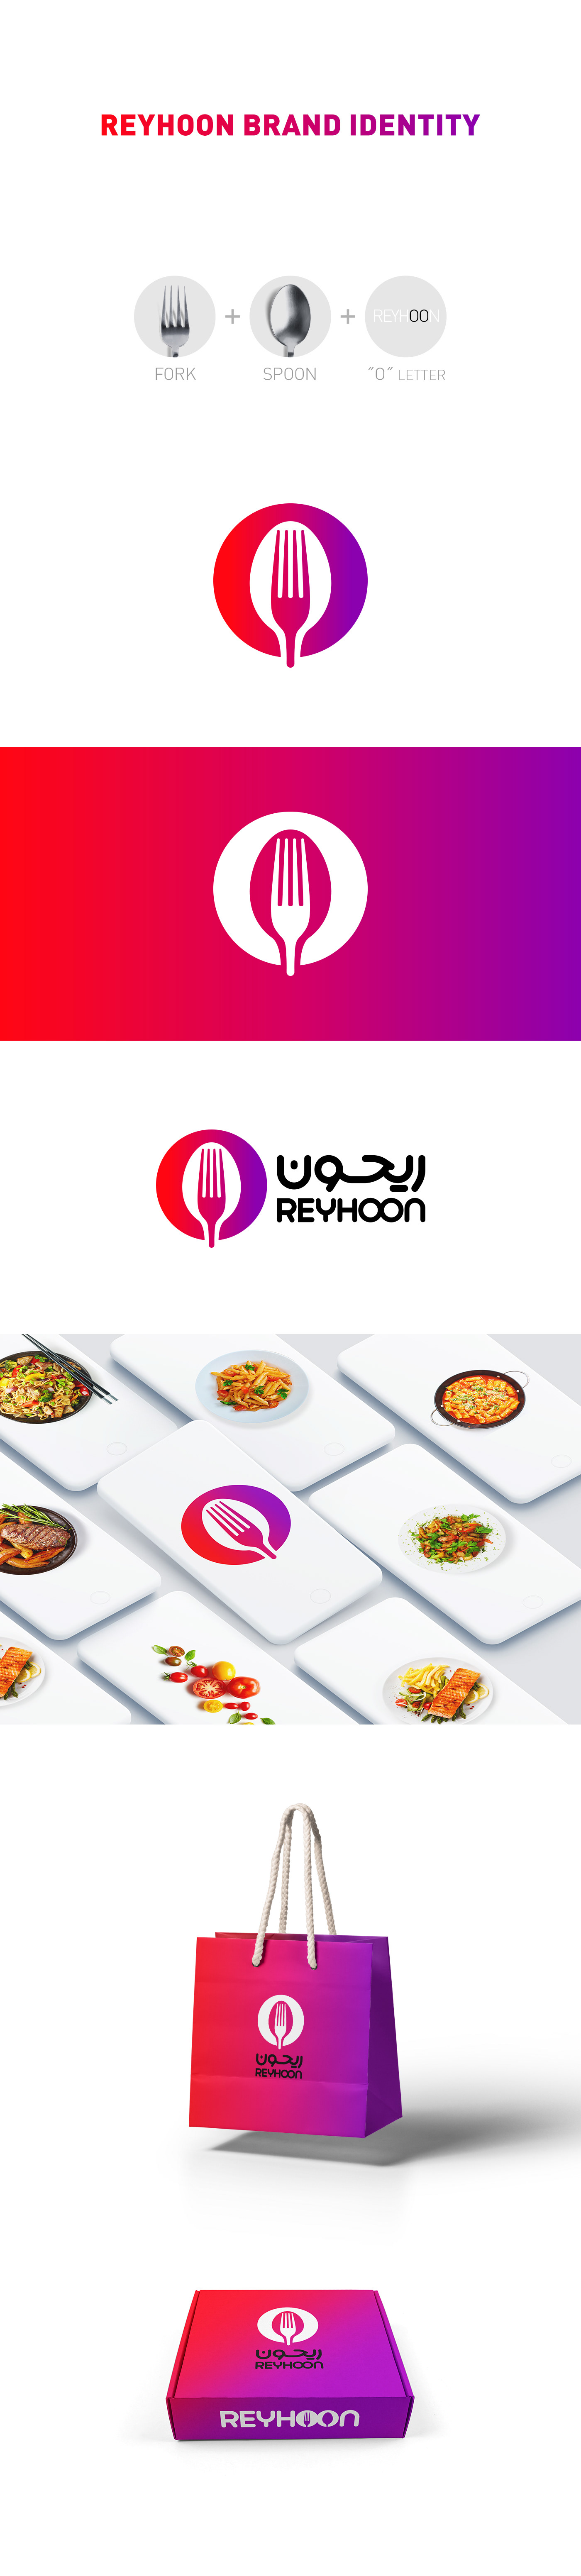 Reyhoon sinasankar Food  online delivery logo identity restaurant application